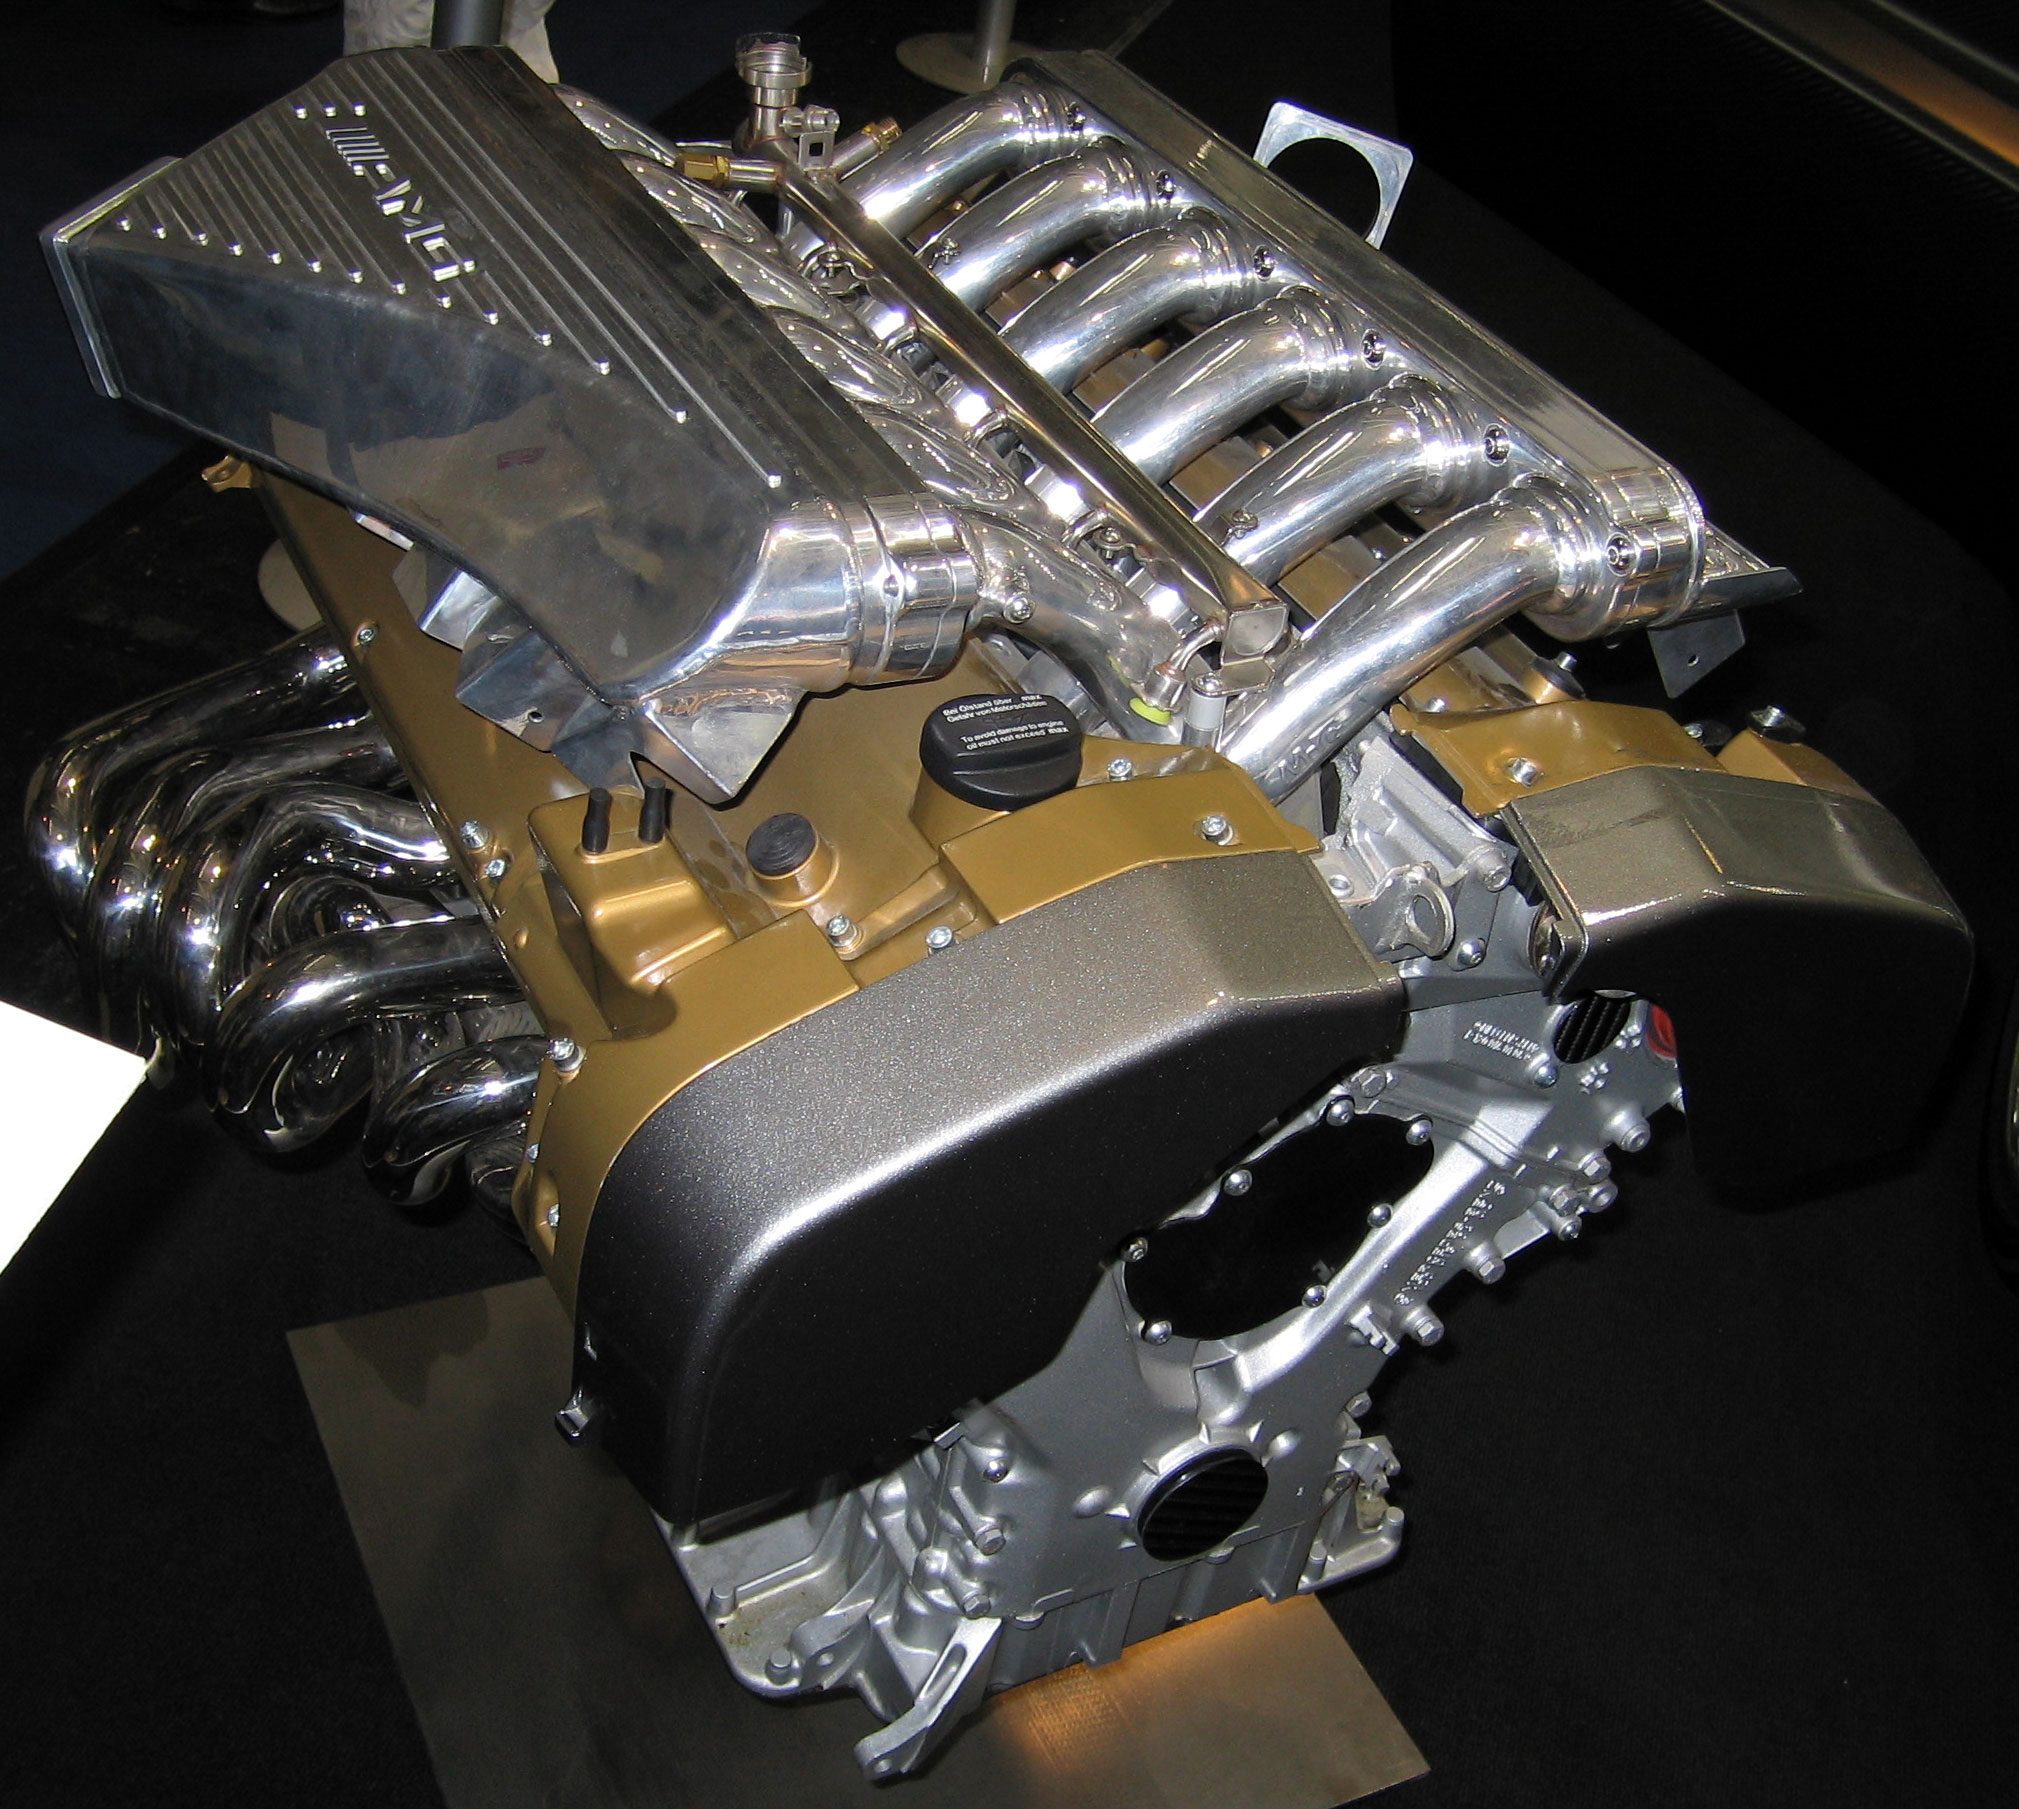 File:Pagani Zonda F engine (AMG V12 7.3l)2.jpg - Wikimedia Commons